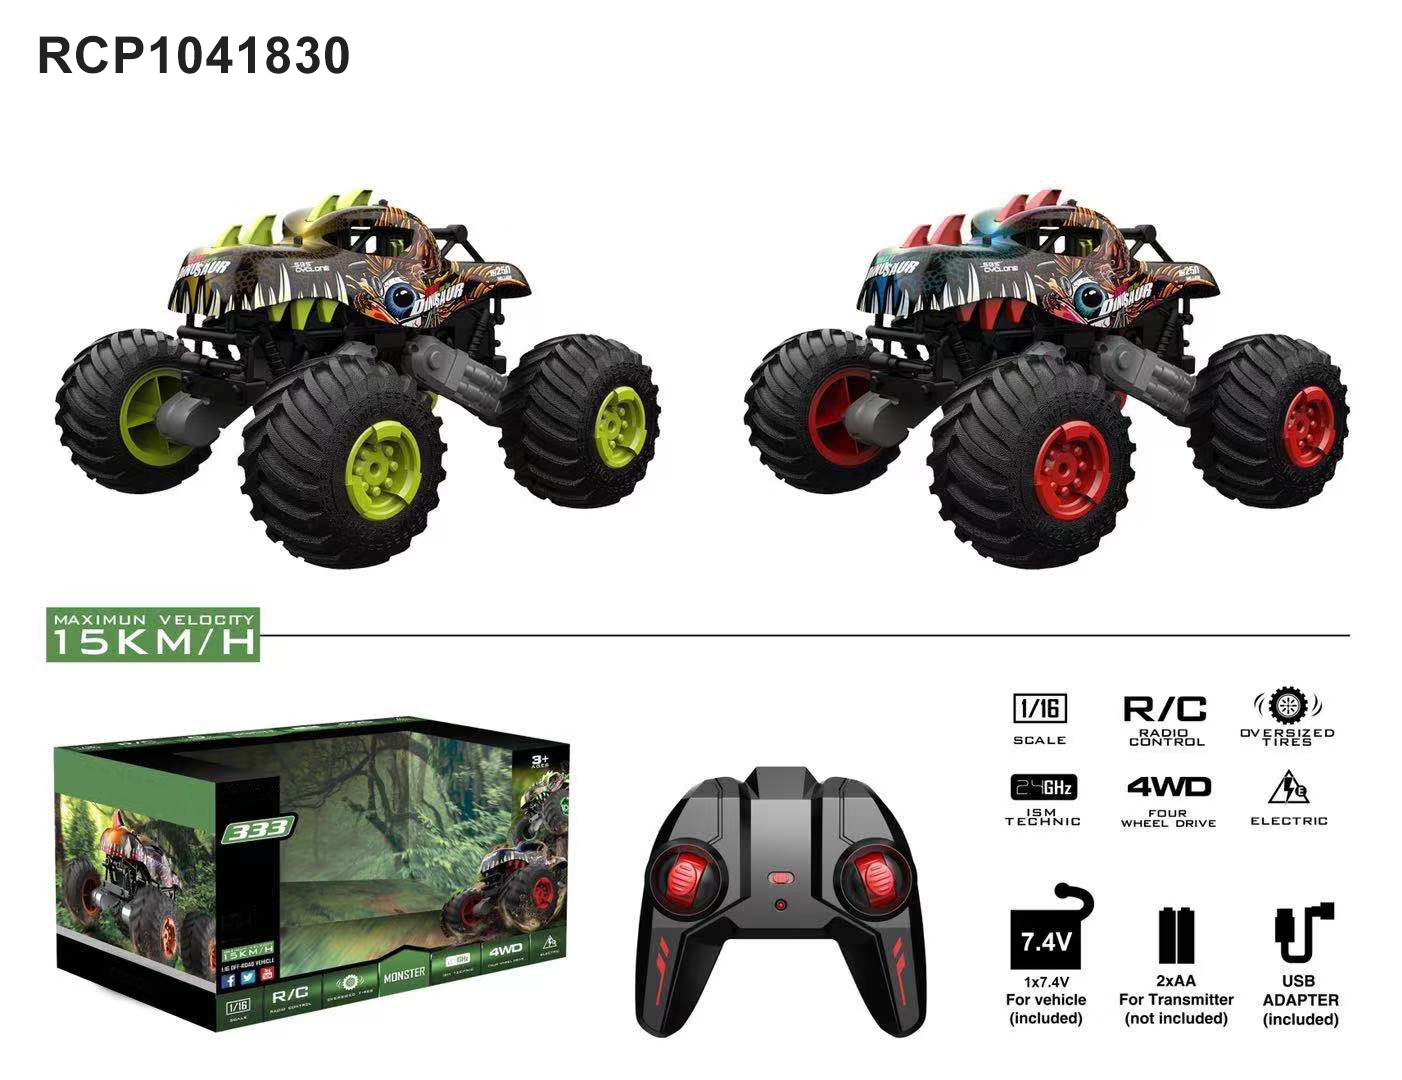 PAK TAT monster truck rc toys manufacturers-1